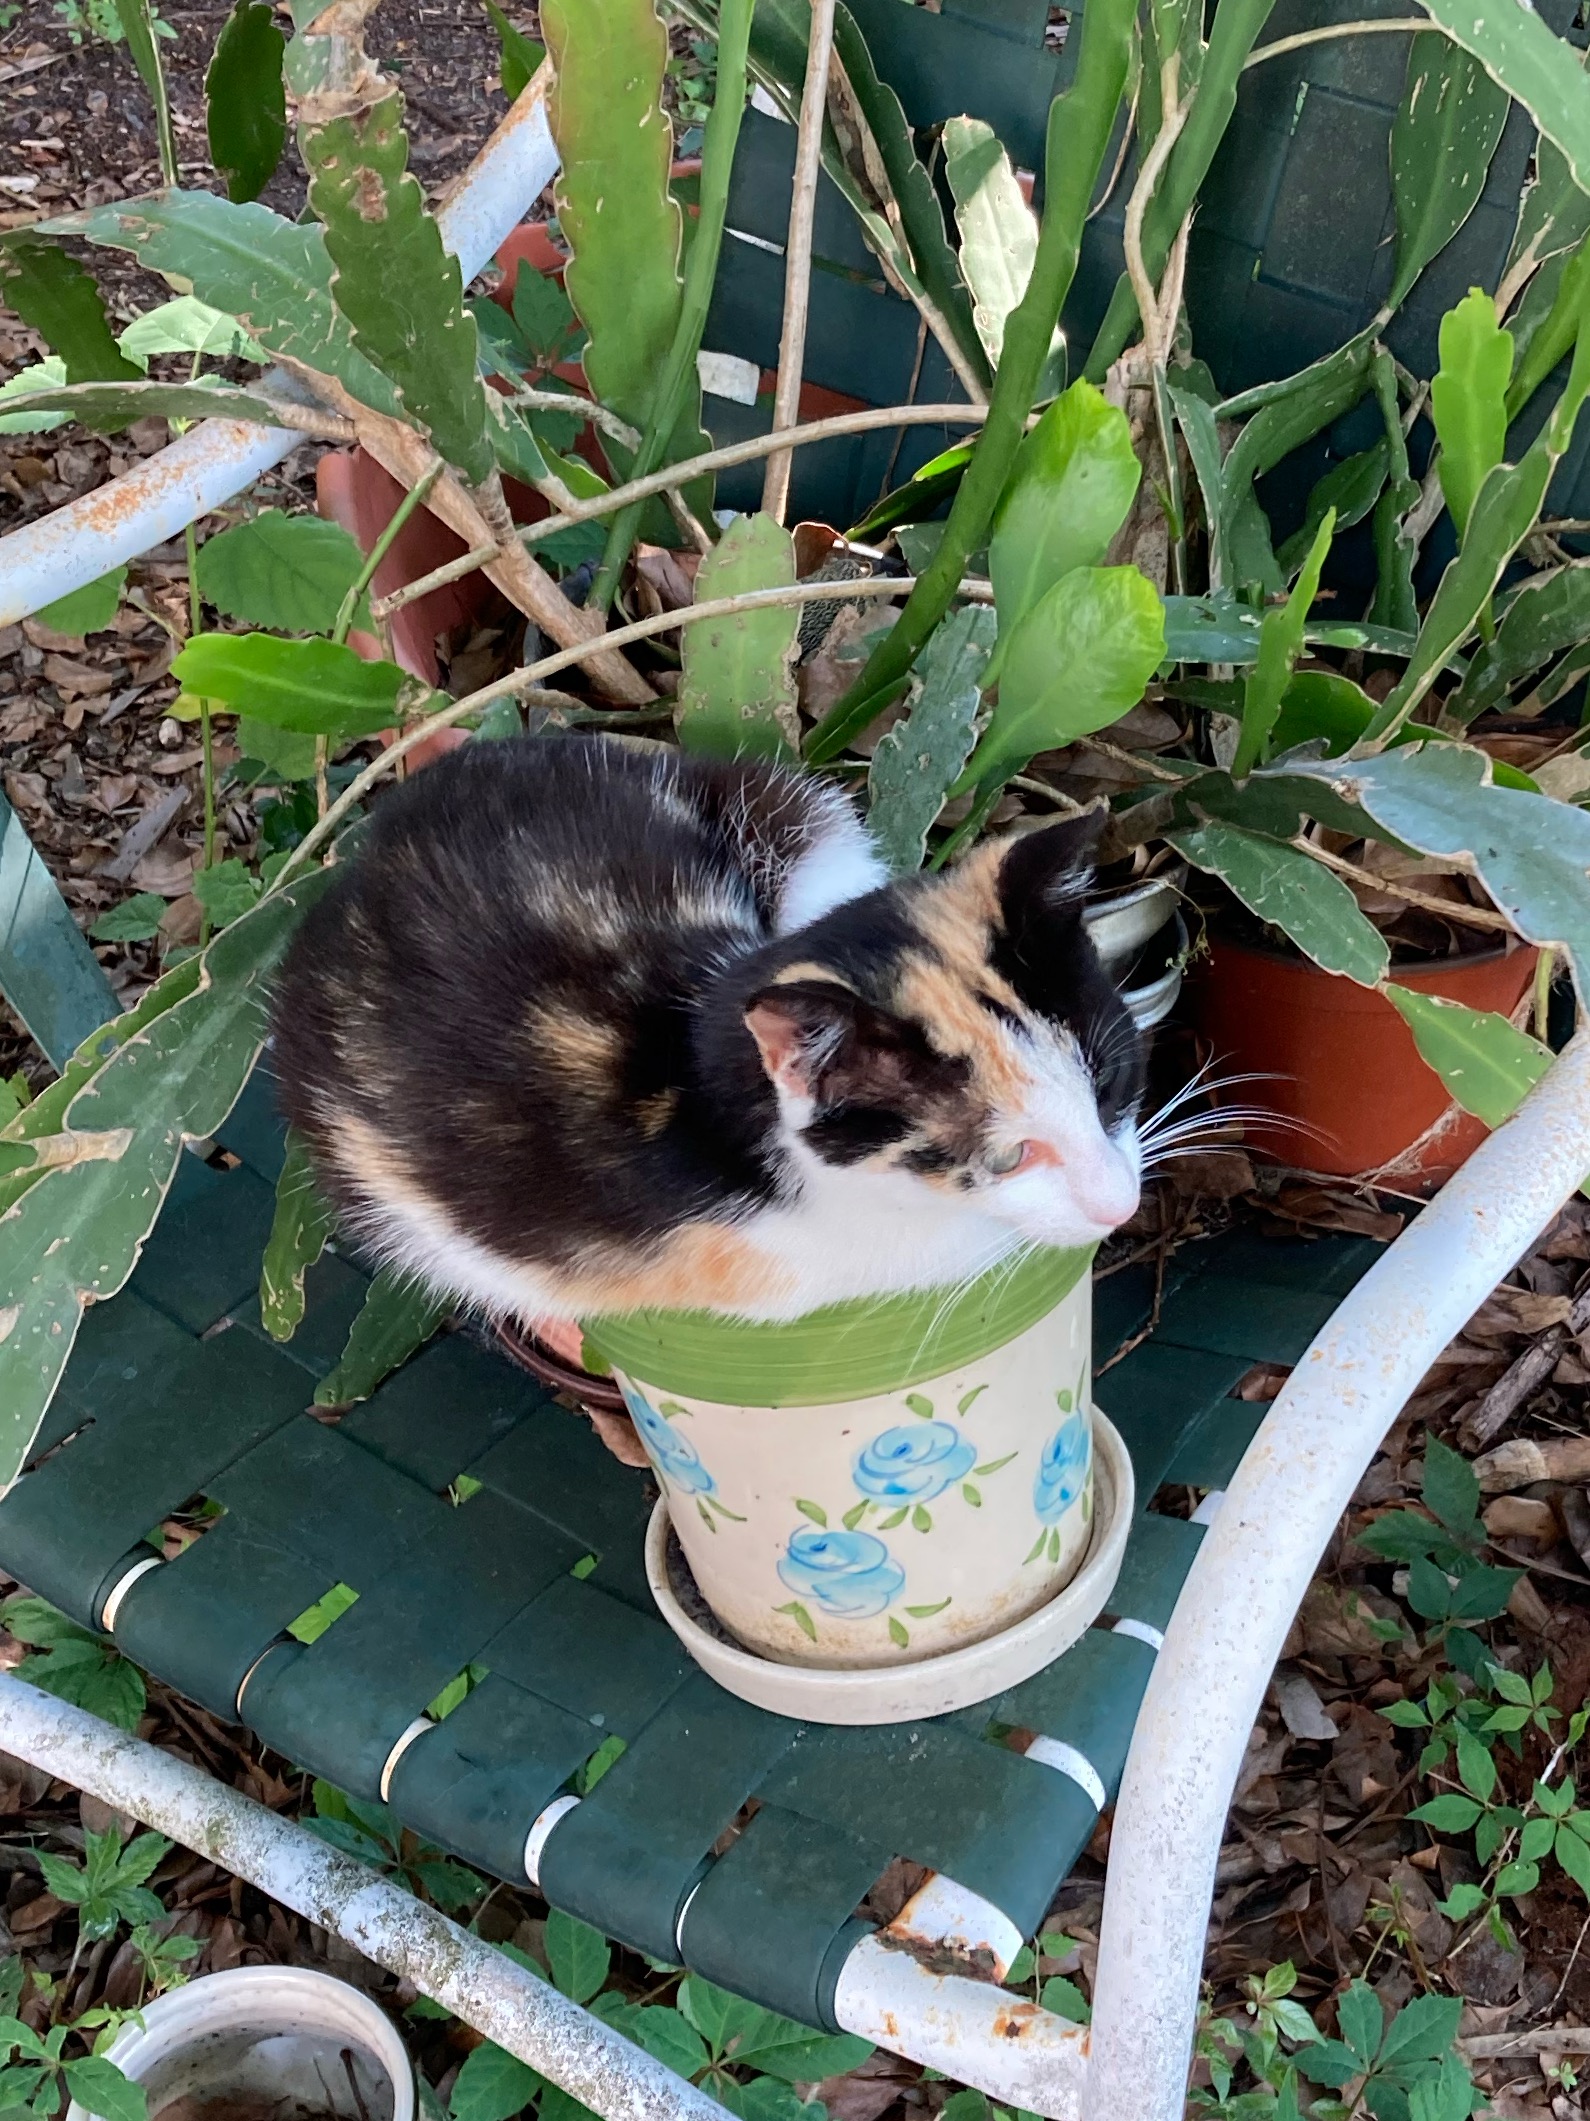 Thumbelina enjoying the garden on a sunny day